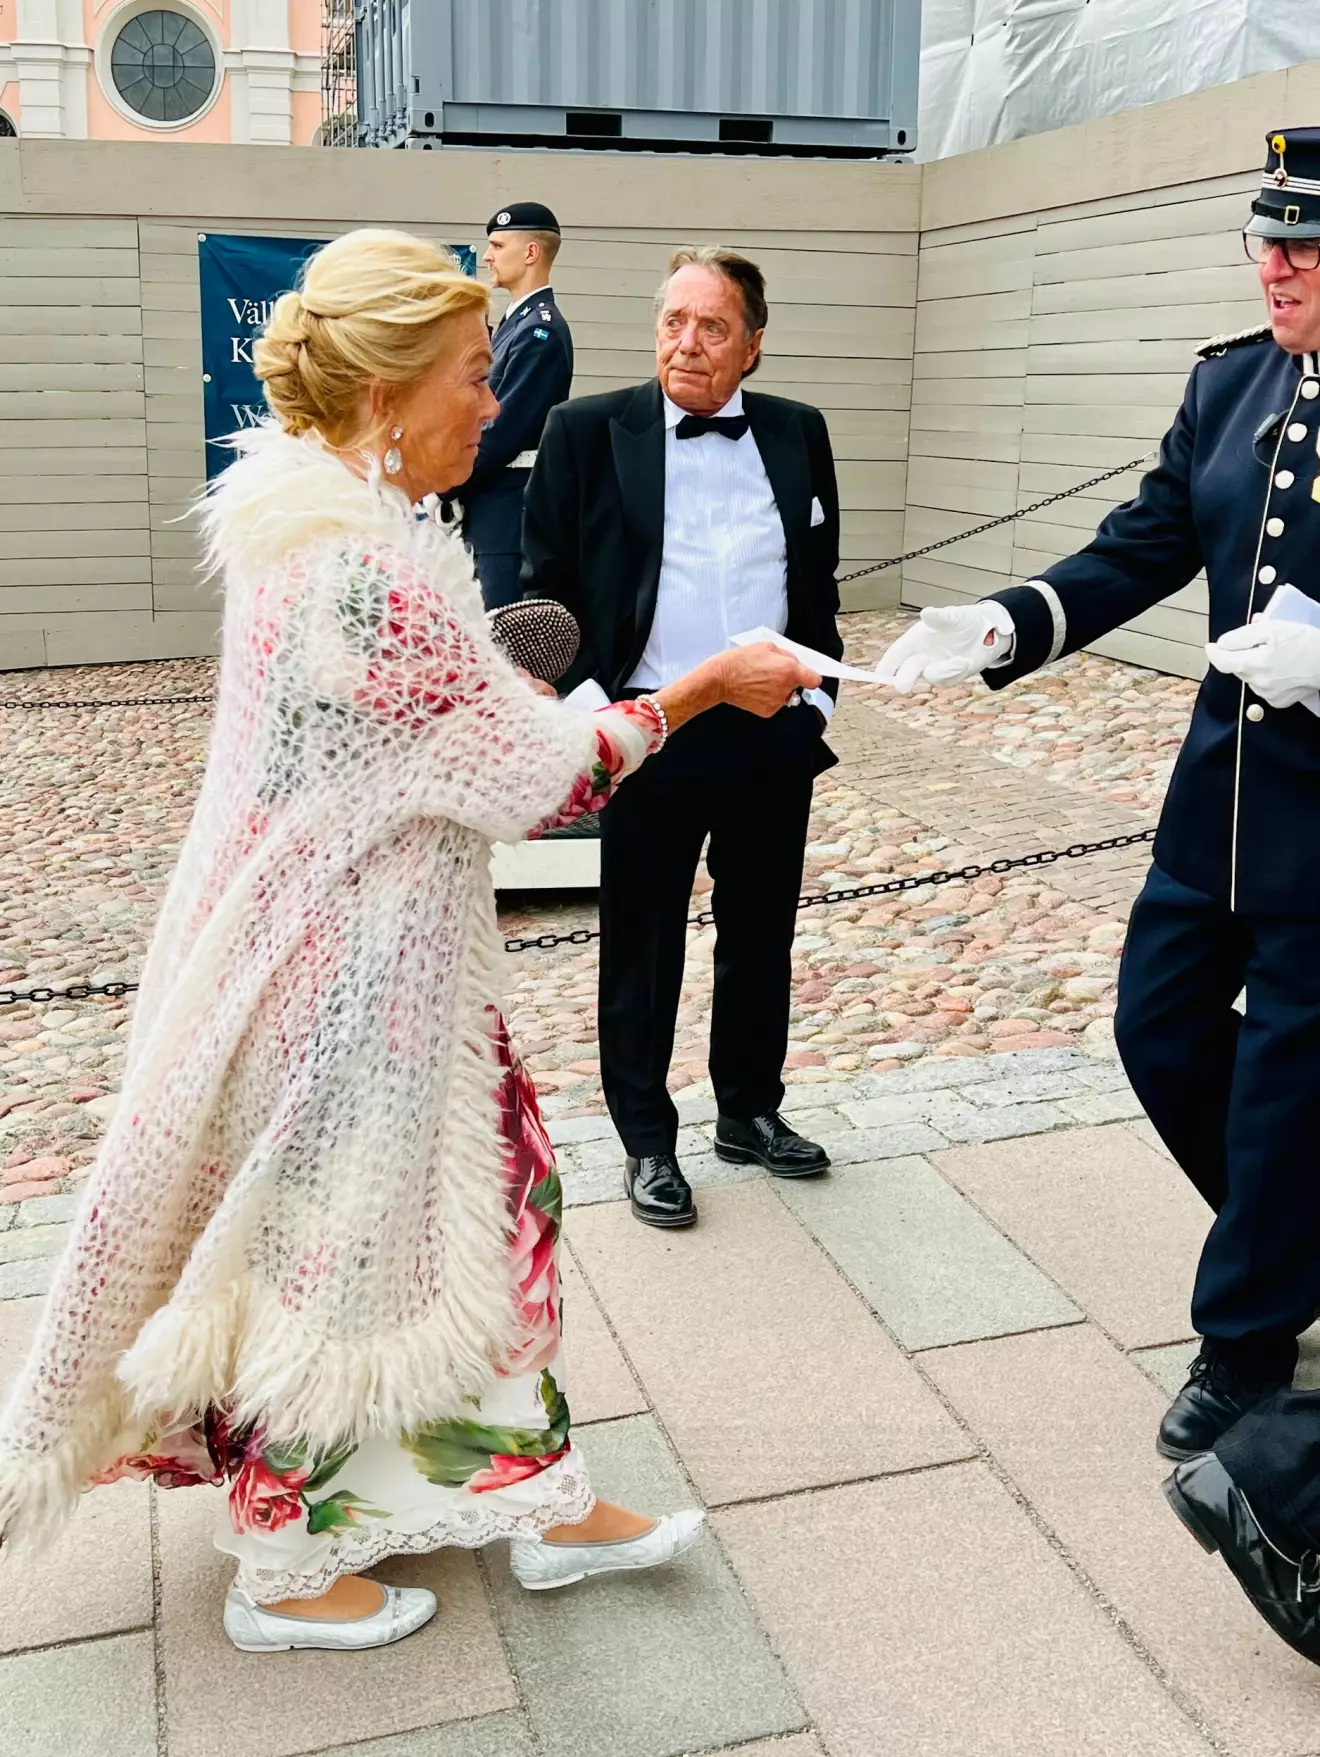 Kungavännerna Suzanne Wiklund och Jan ”Janne” Bonnier